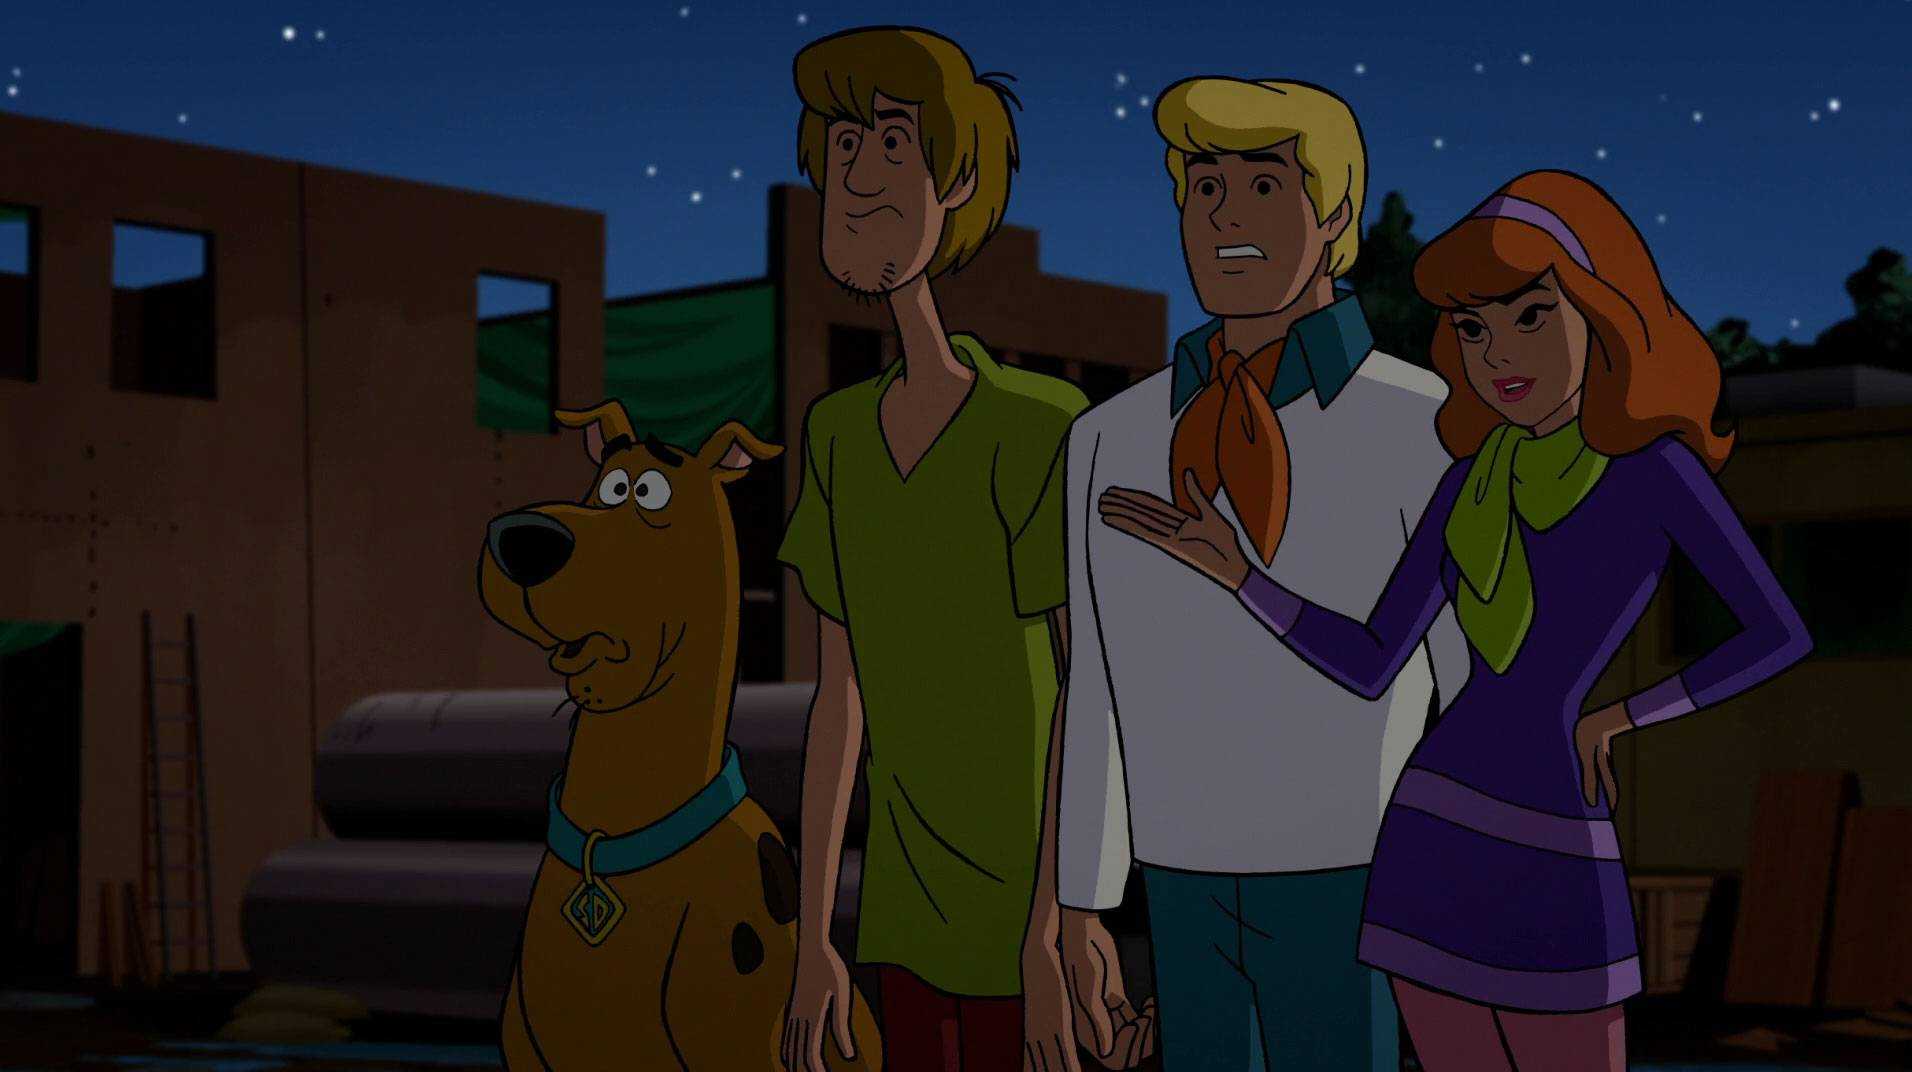 The scooby doo show. Скуби Ду. Scooby Doo Корпорация тайна.